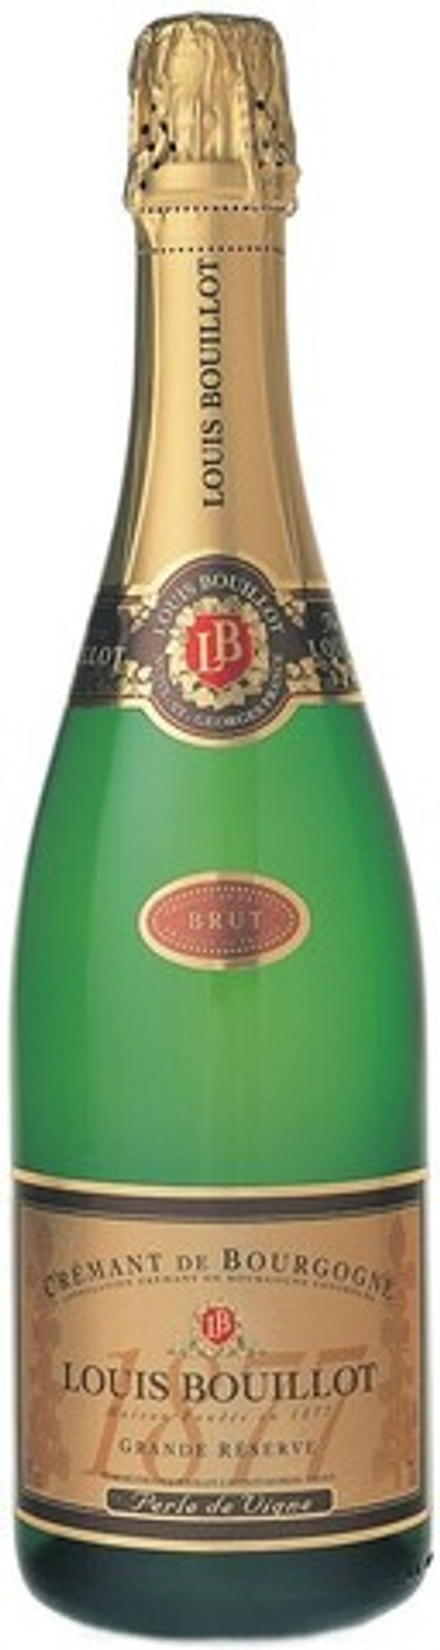 Игристое вино Louis Bouillot Cremant de Bourgogne Grand Reserve Brut, 0,75 л.